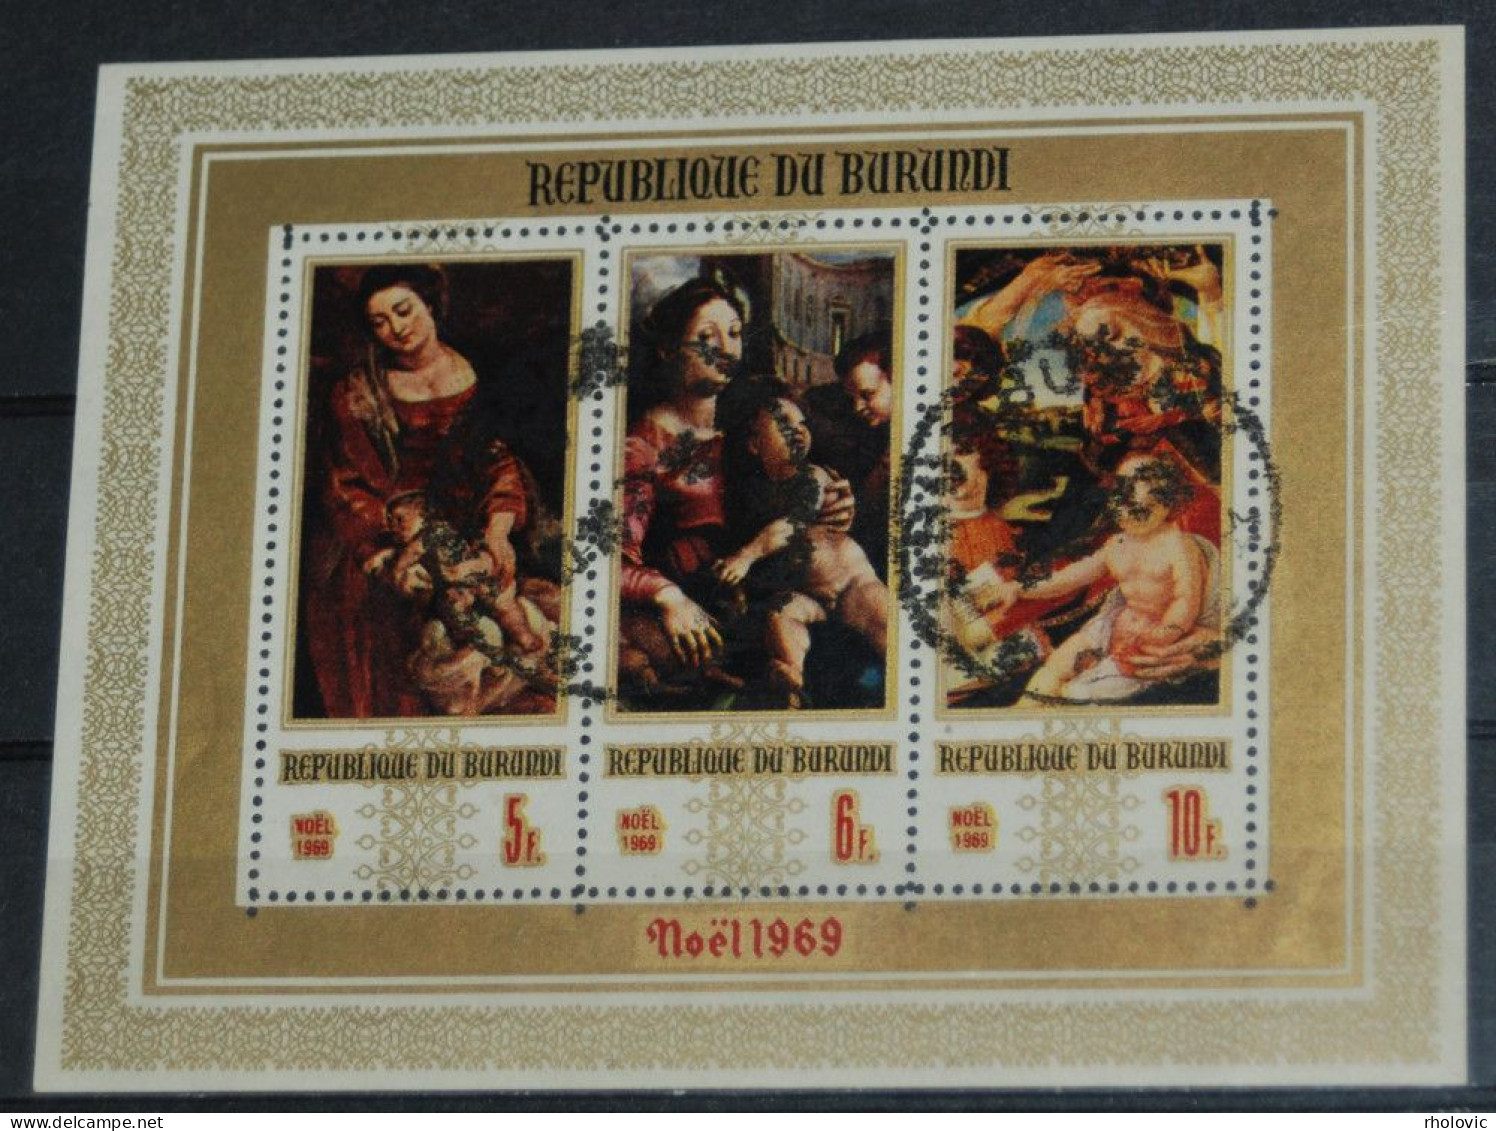 BURUNDI 1969, Paintings, Art, Mi #B38, Miniature Sheet, Used - Religious